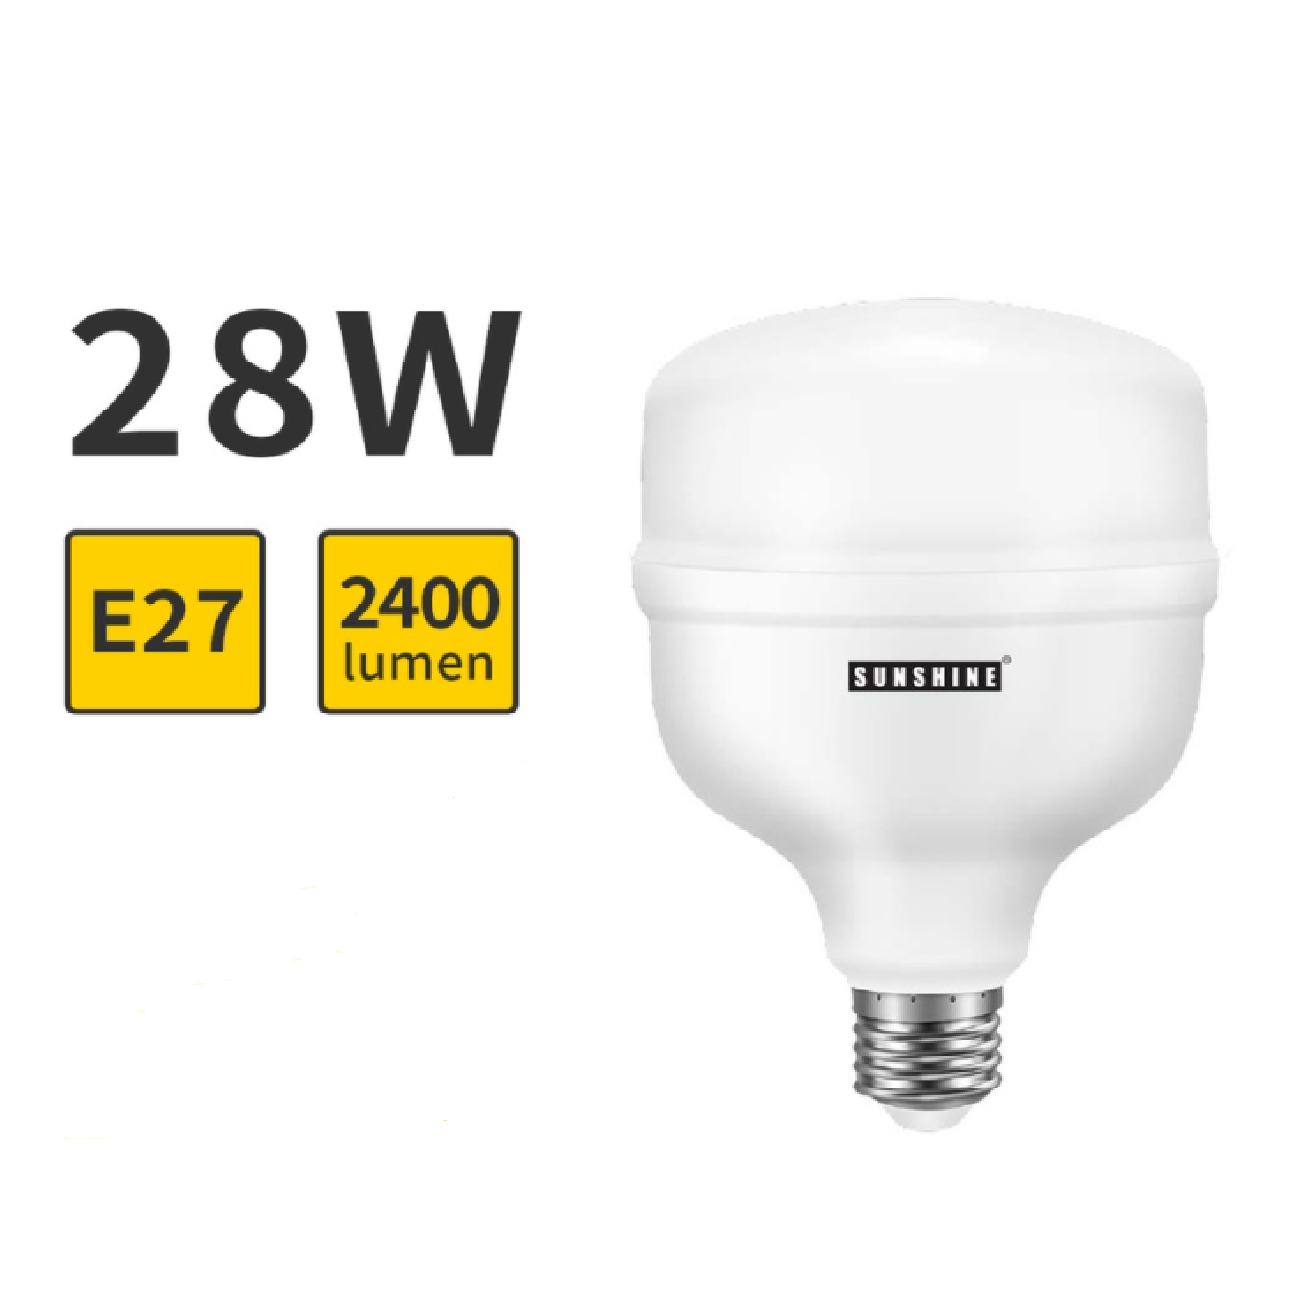 Sunshine 28W LED High Power Light Bulb (Up To 2400 Lumens) E27